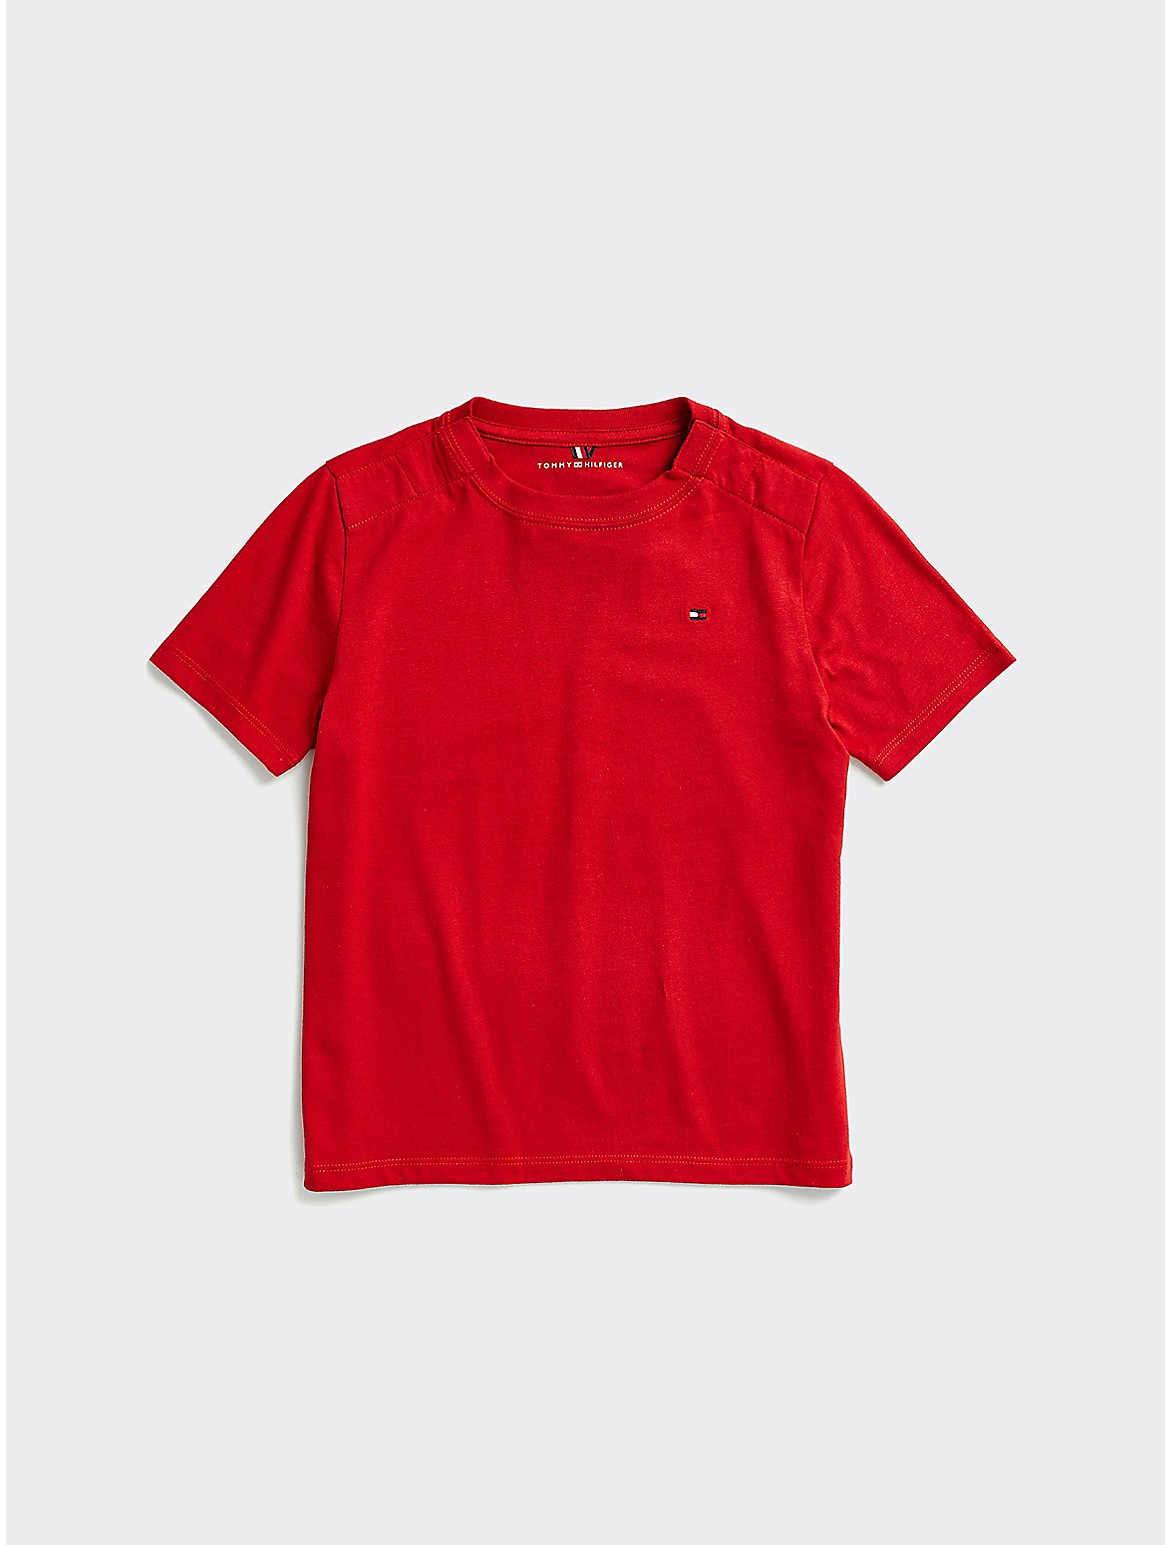 Tommy Hilfiger Boys' Classic T-Shirt - Red - M